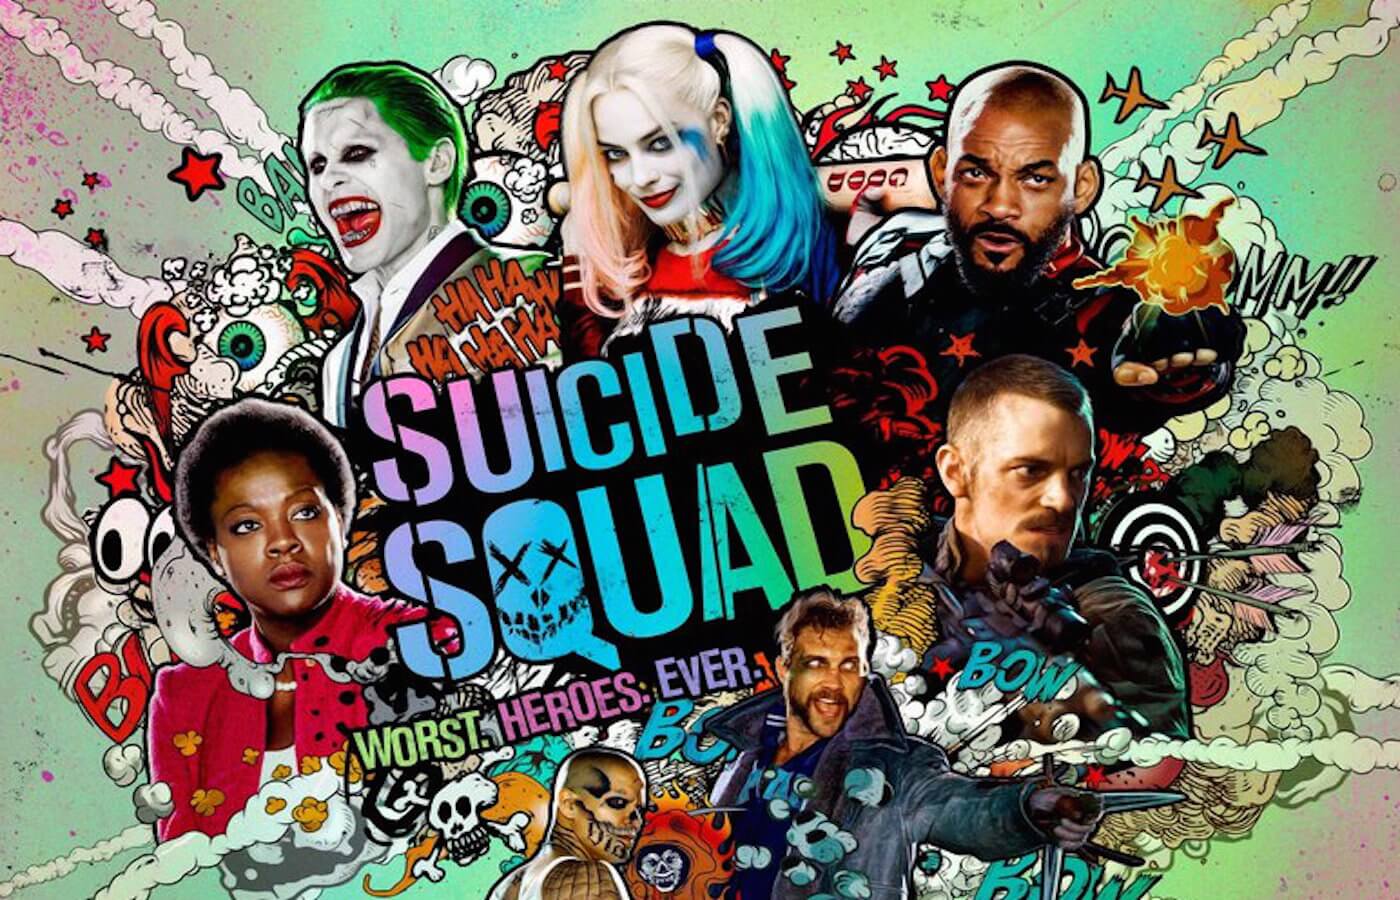 Suicide squad poster1